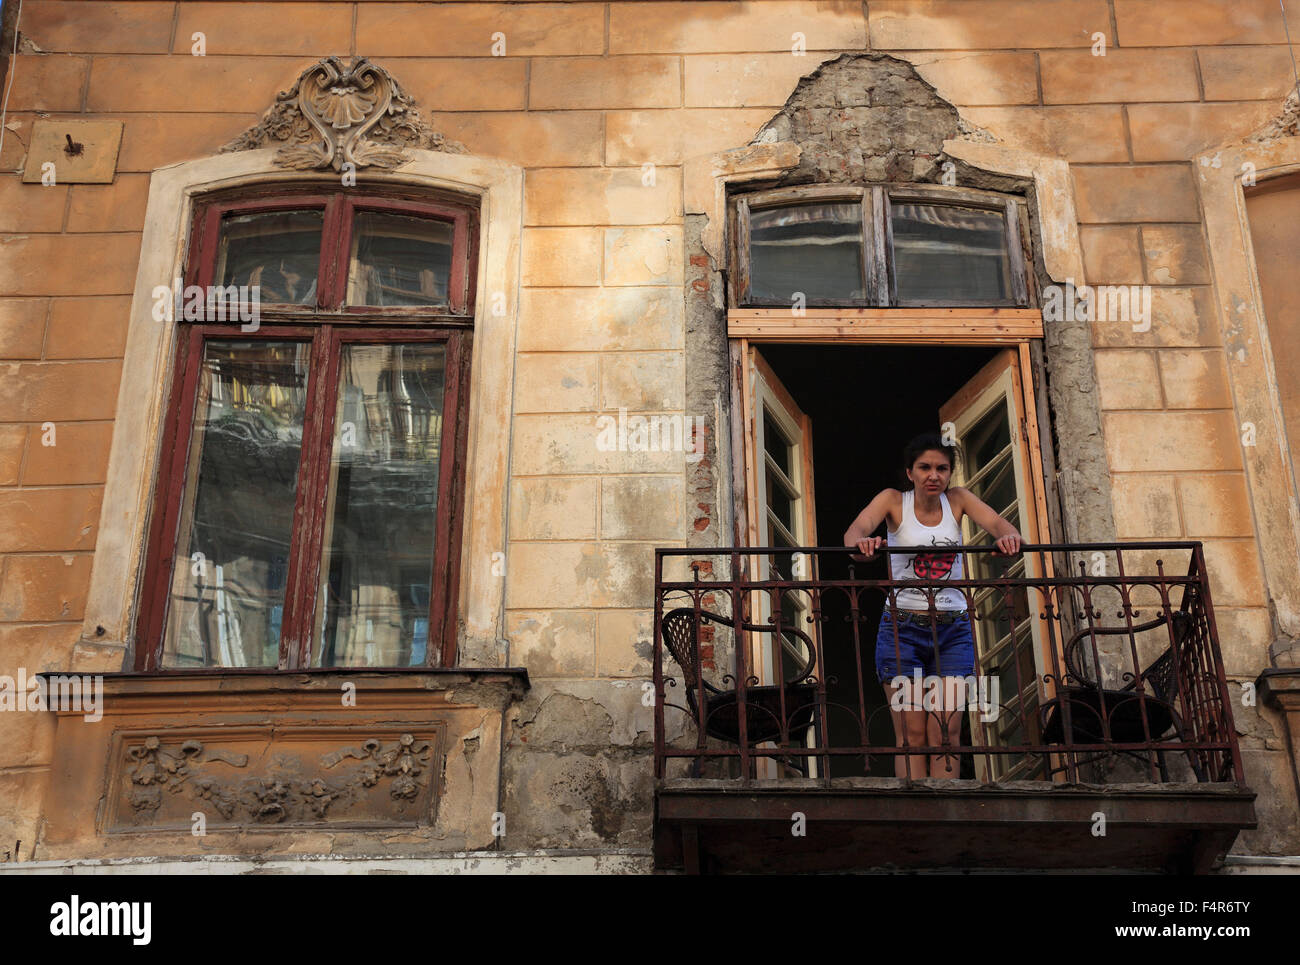 Área de reurbanización, edificios catalogados en el centro histórico de Bucarest para la rehabilitación, Rumania Foto de stock